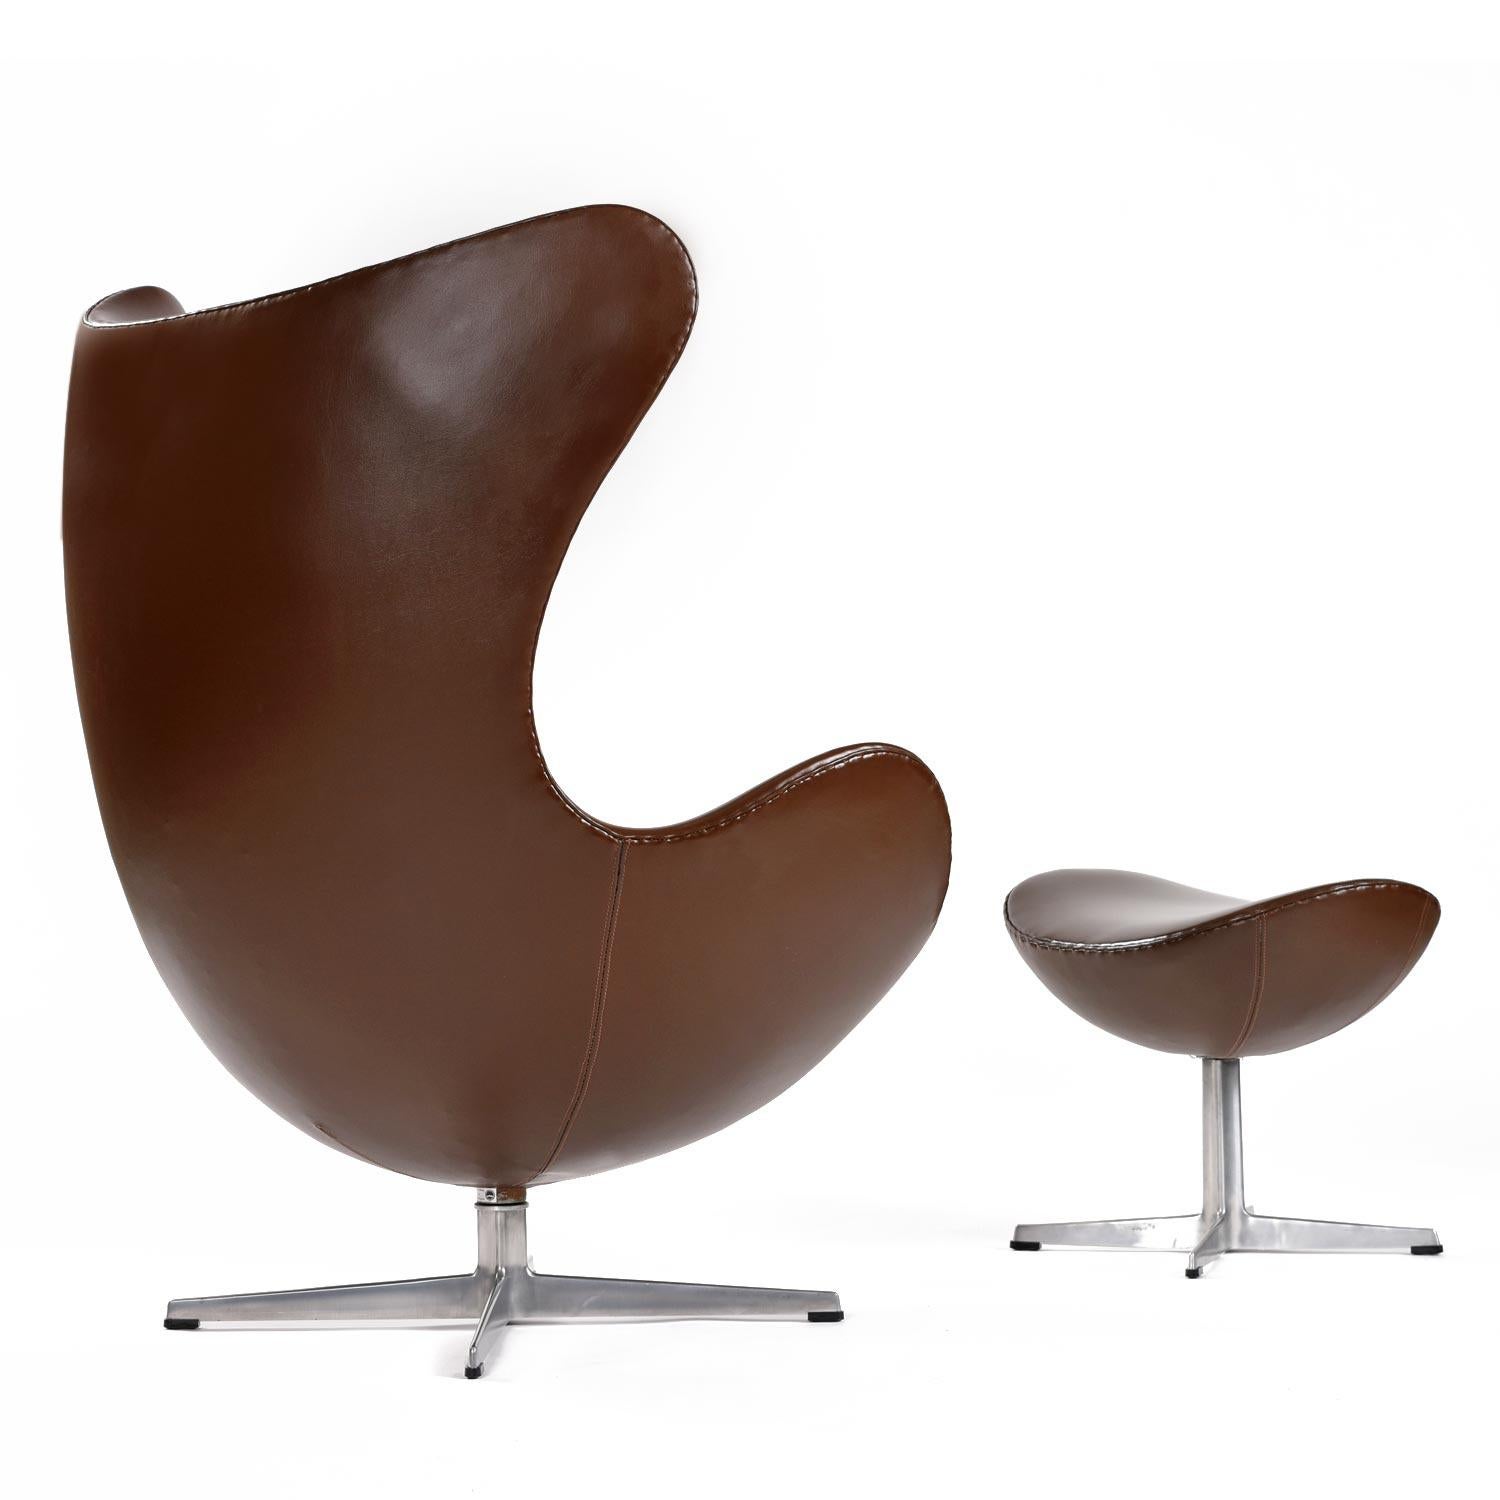 Late 20th Century 1974 Original Brown Leather Arne Jacobsen for Fritz Hansen Egg Chair & Ottoman For Sale